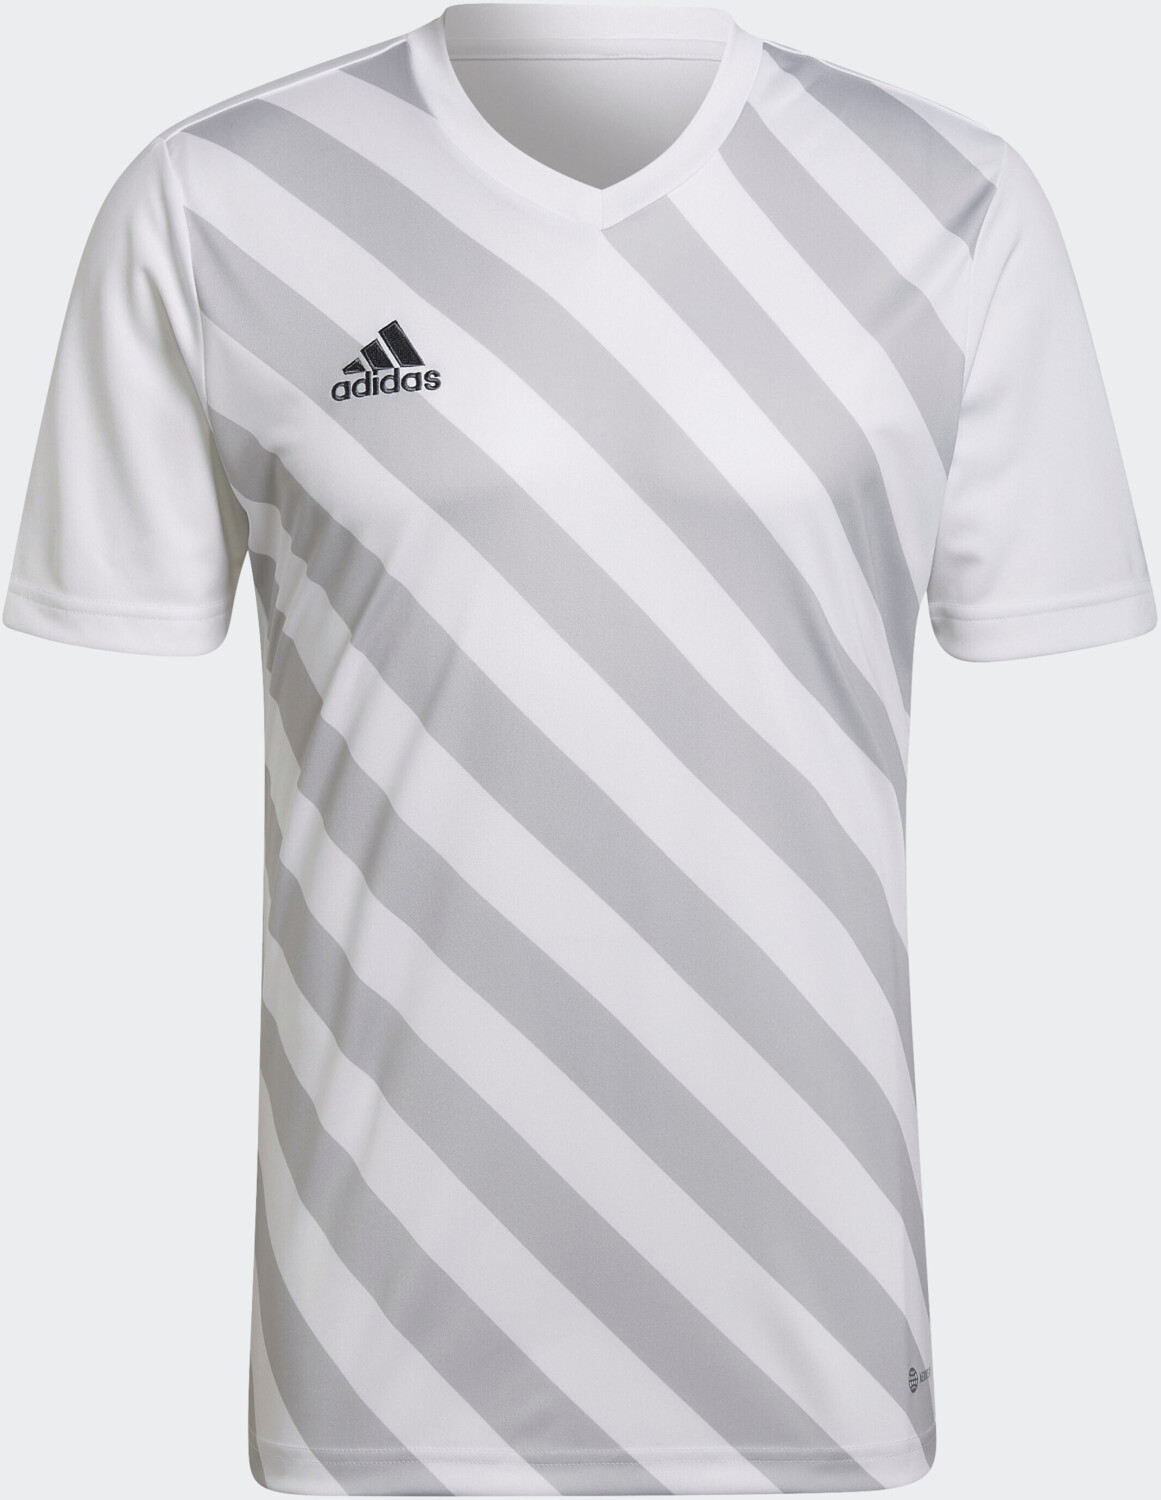 ab Adidas bei Entrada light 22 € grey Graphic Trikot white/team Preisvergleich | 9,70